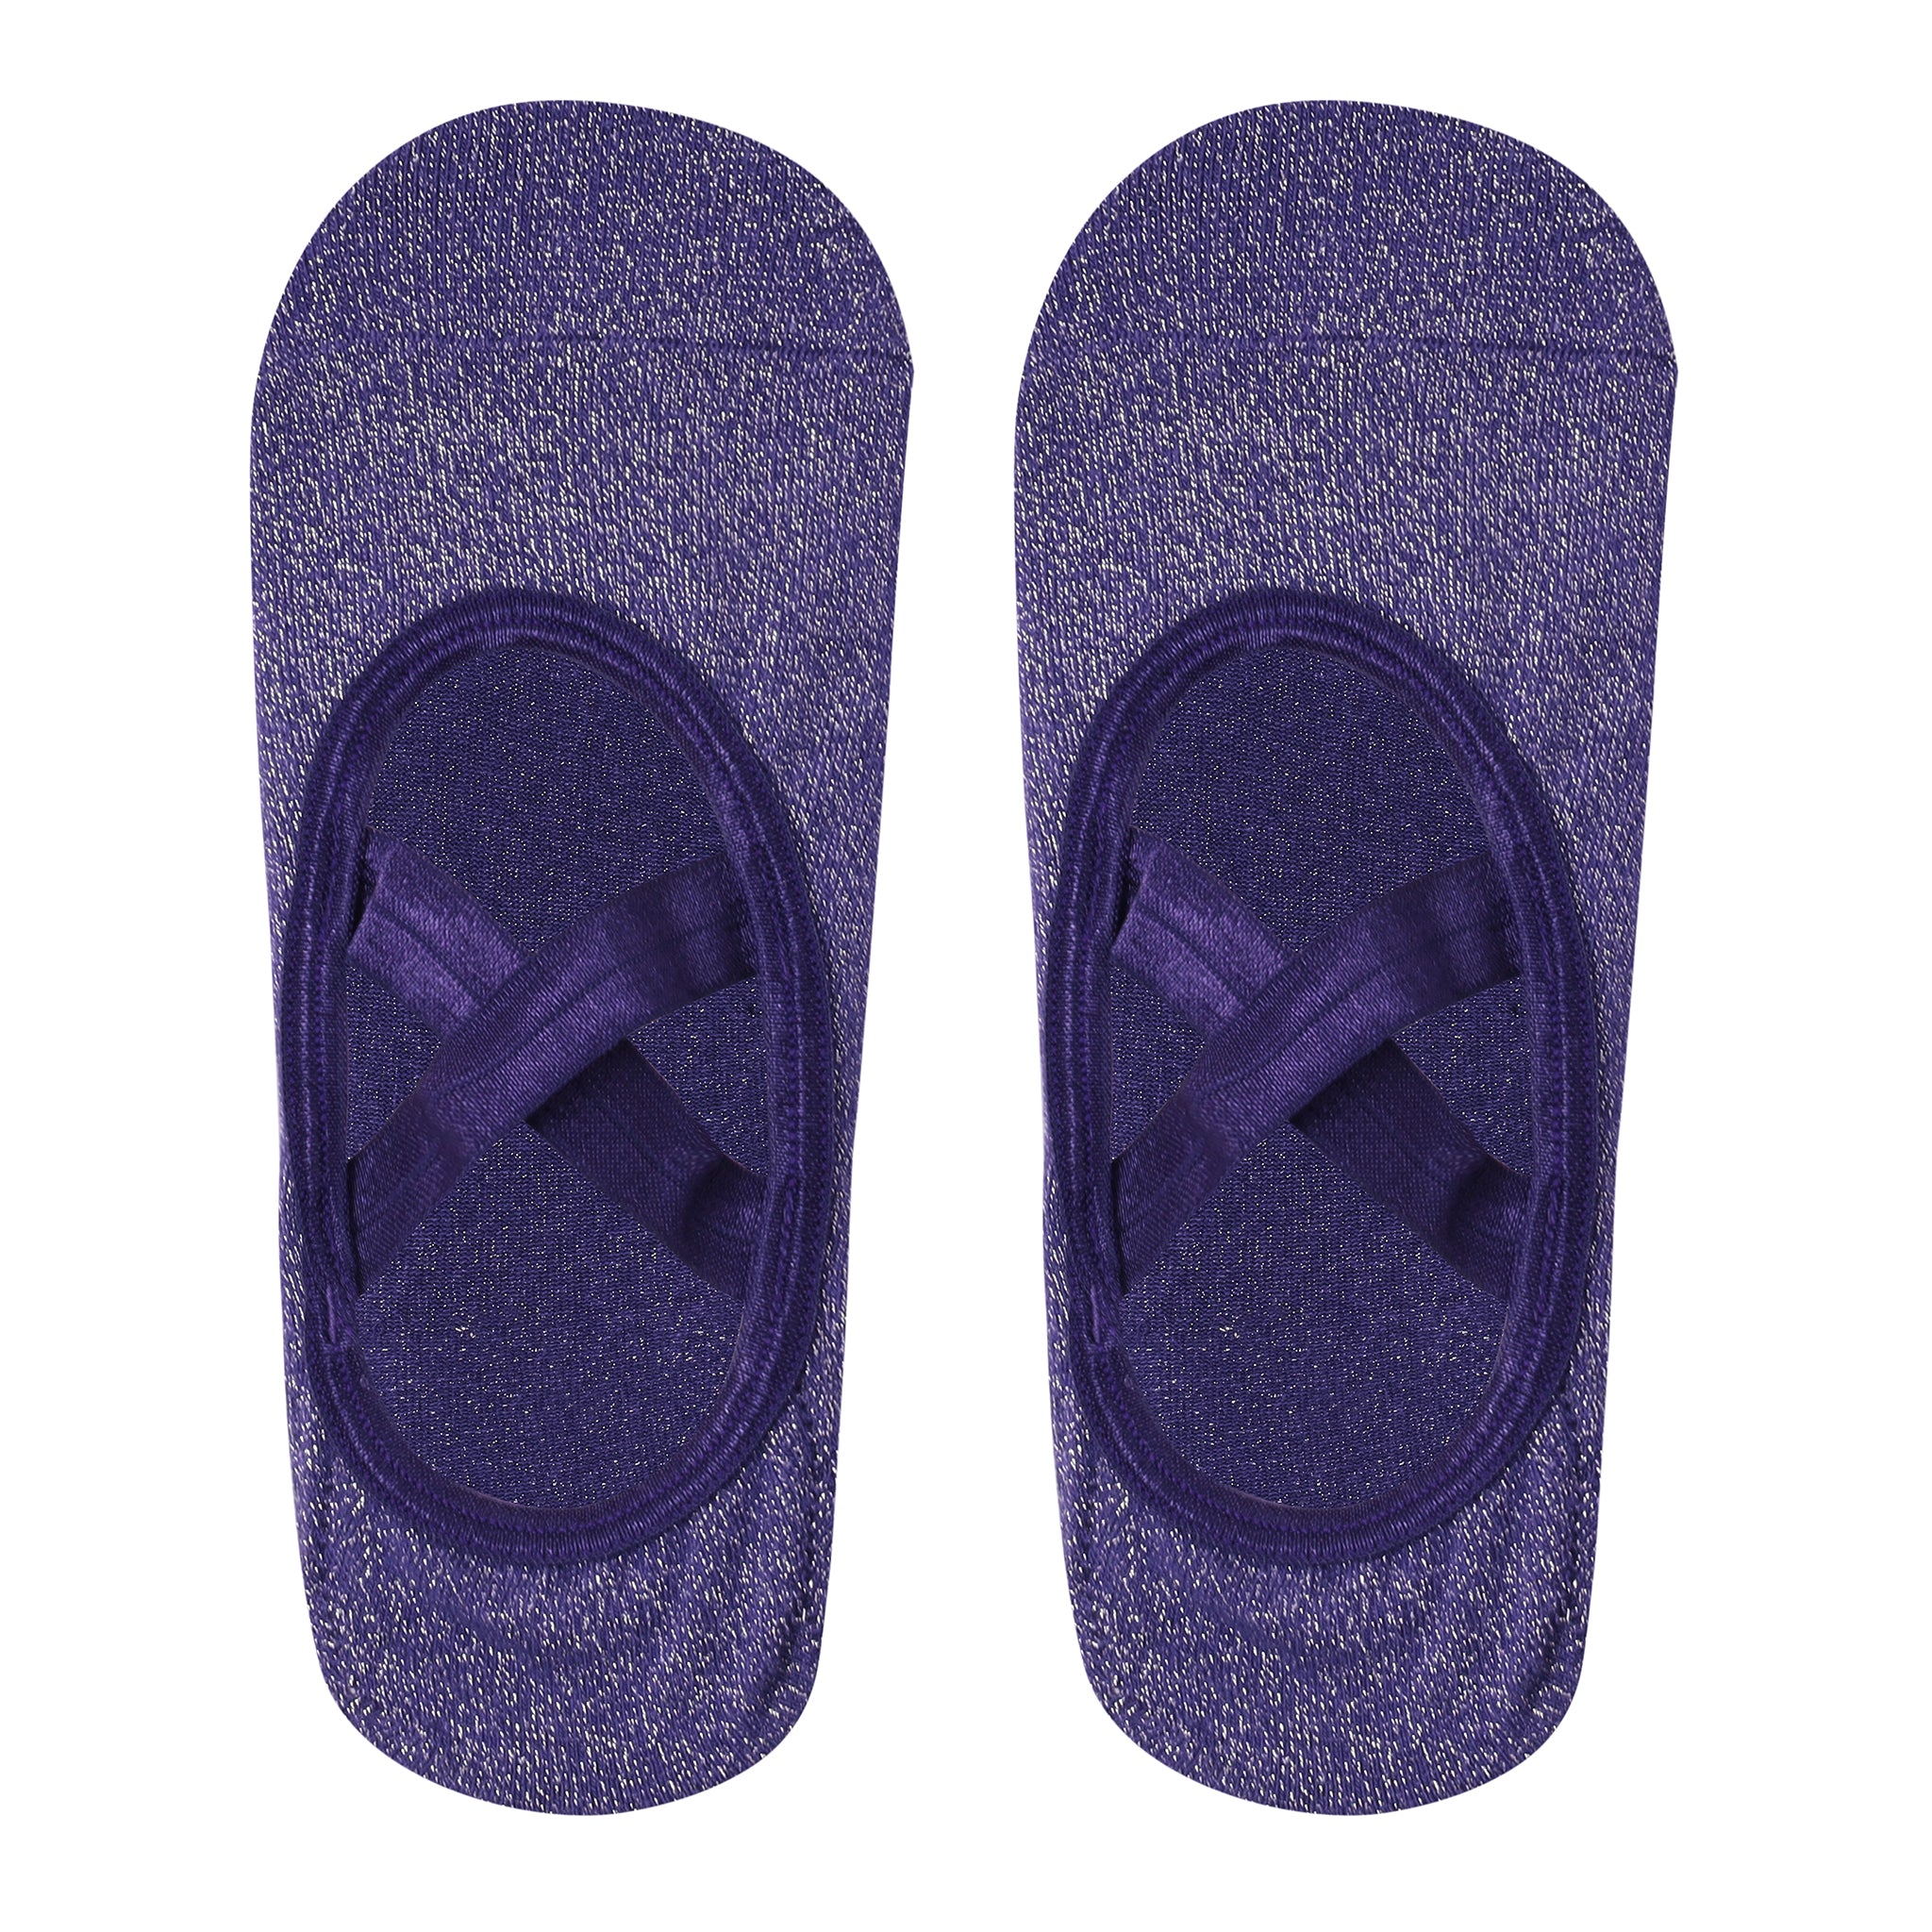 Yoga/ Ballet Socks Anti-Skid Technology - Purple